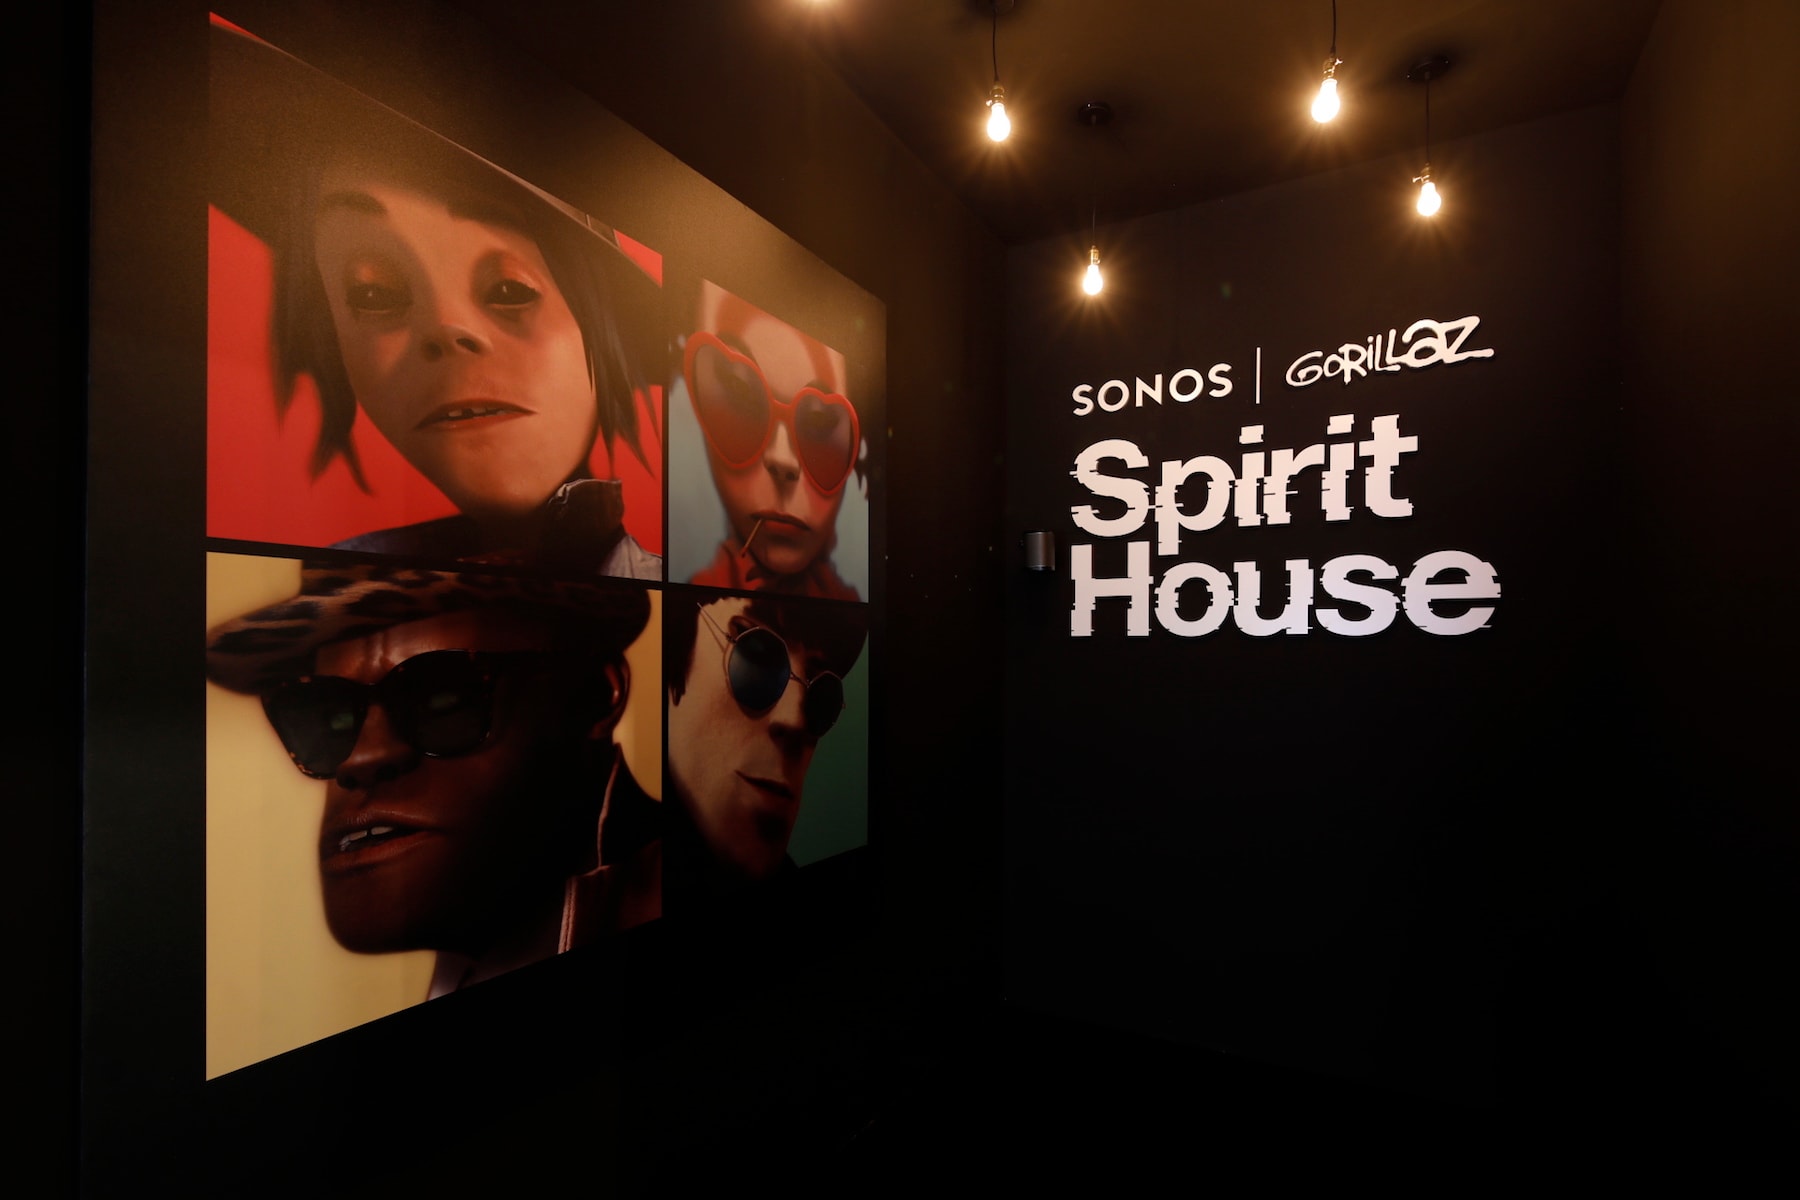 Sonos x Gorillaz “Spirit House” Shanghai